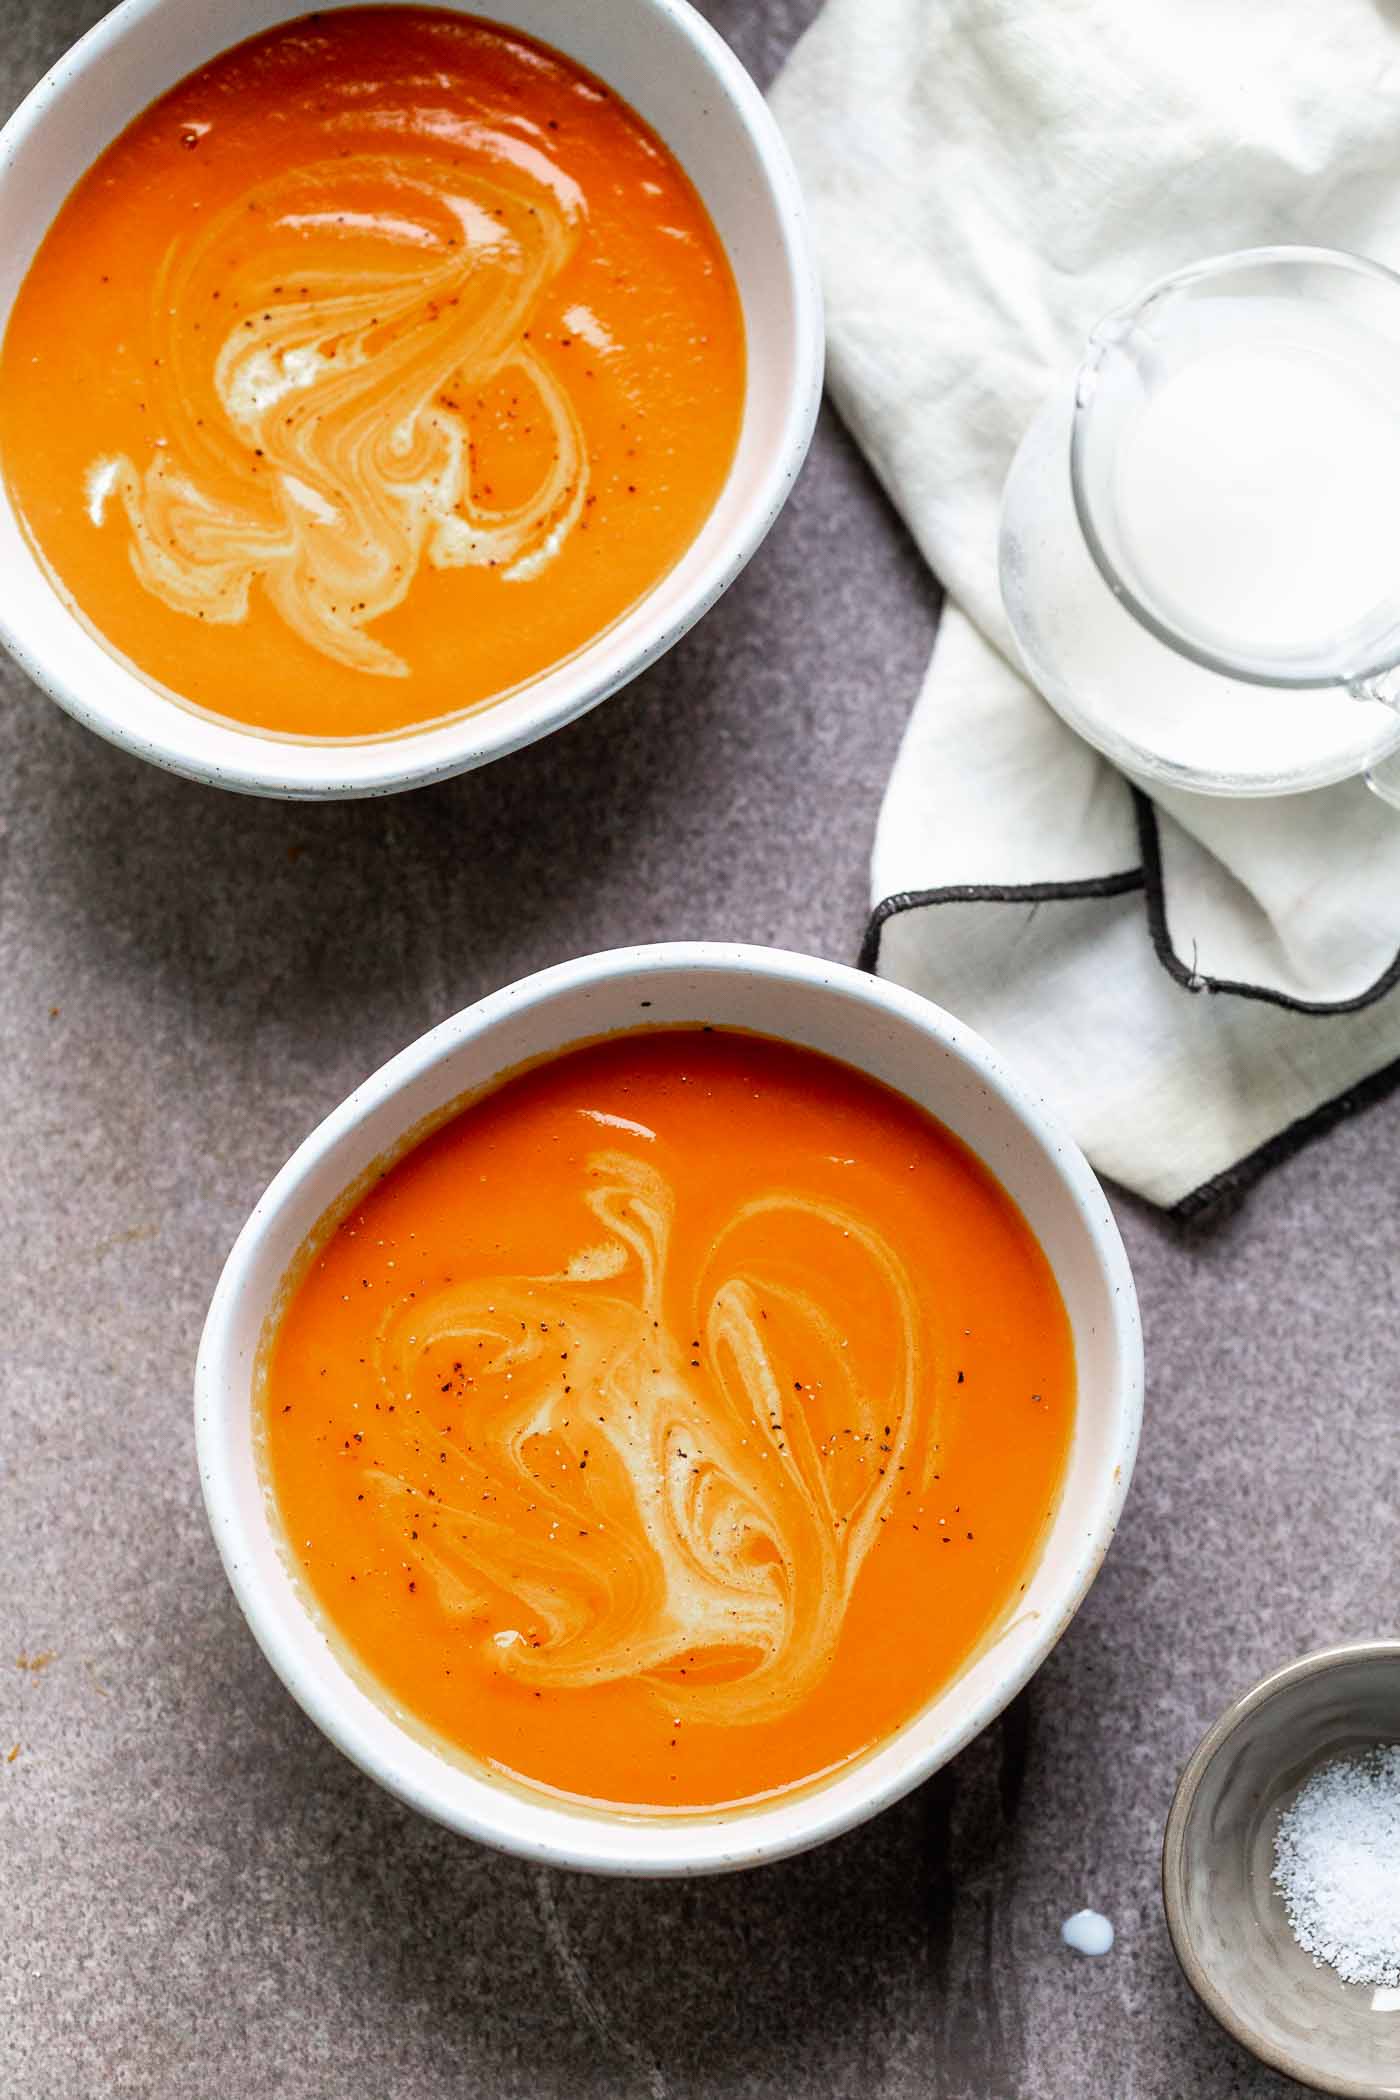 https://www.cookingforkeeps.com/wp-content/uploads/2018/10/5-Ingredient-Creamy-Tomato-Soup-5-1.jpg